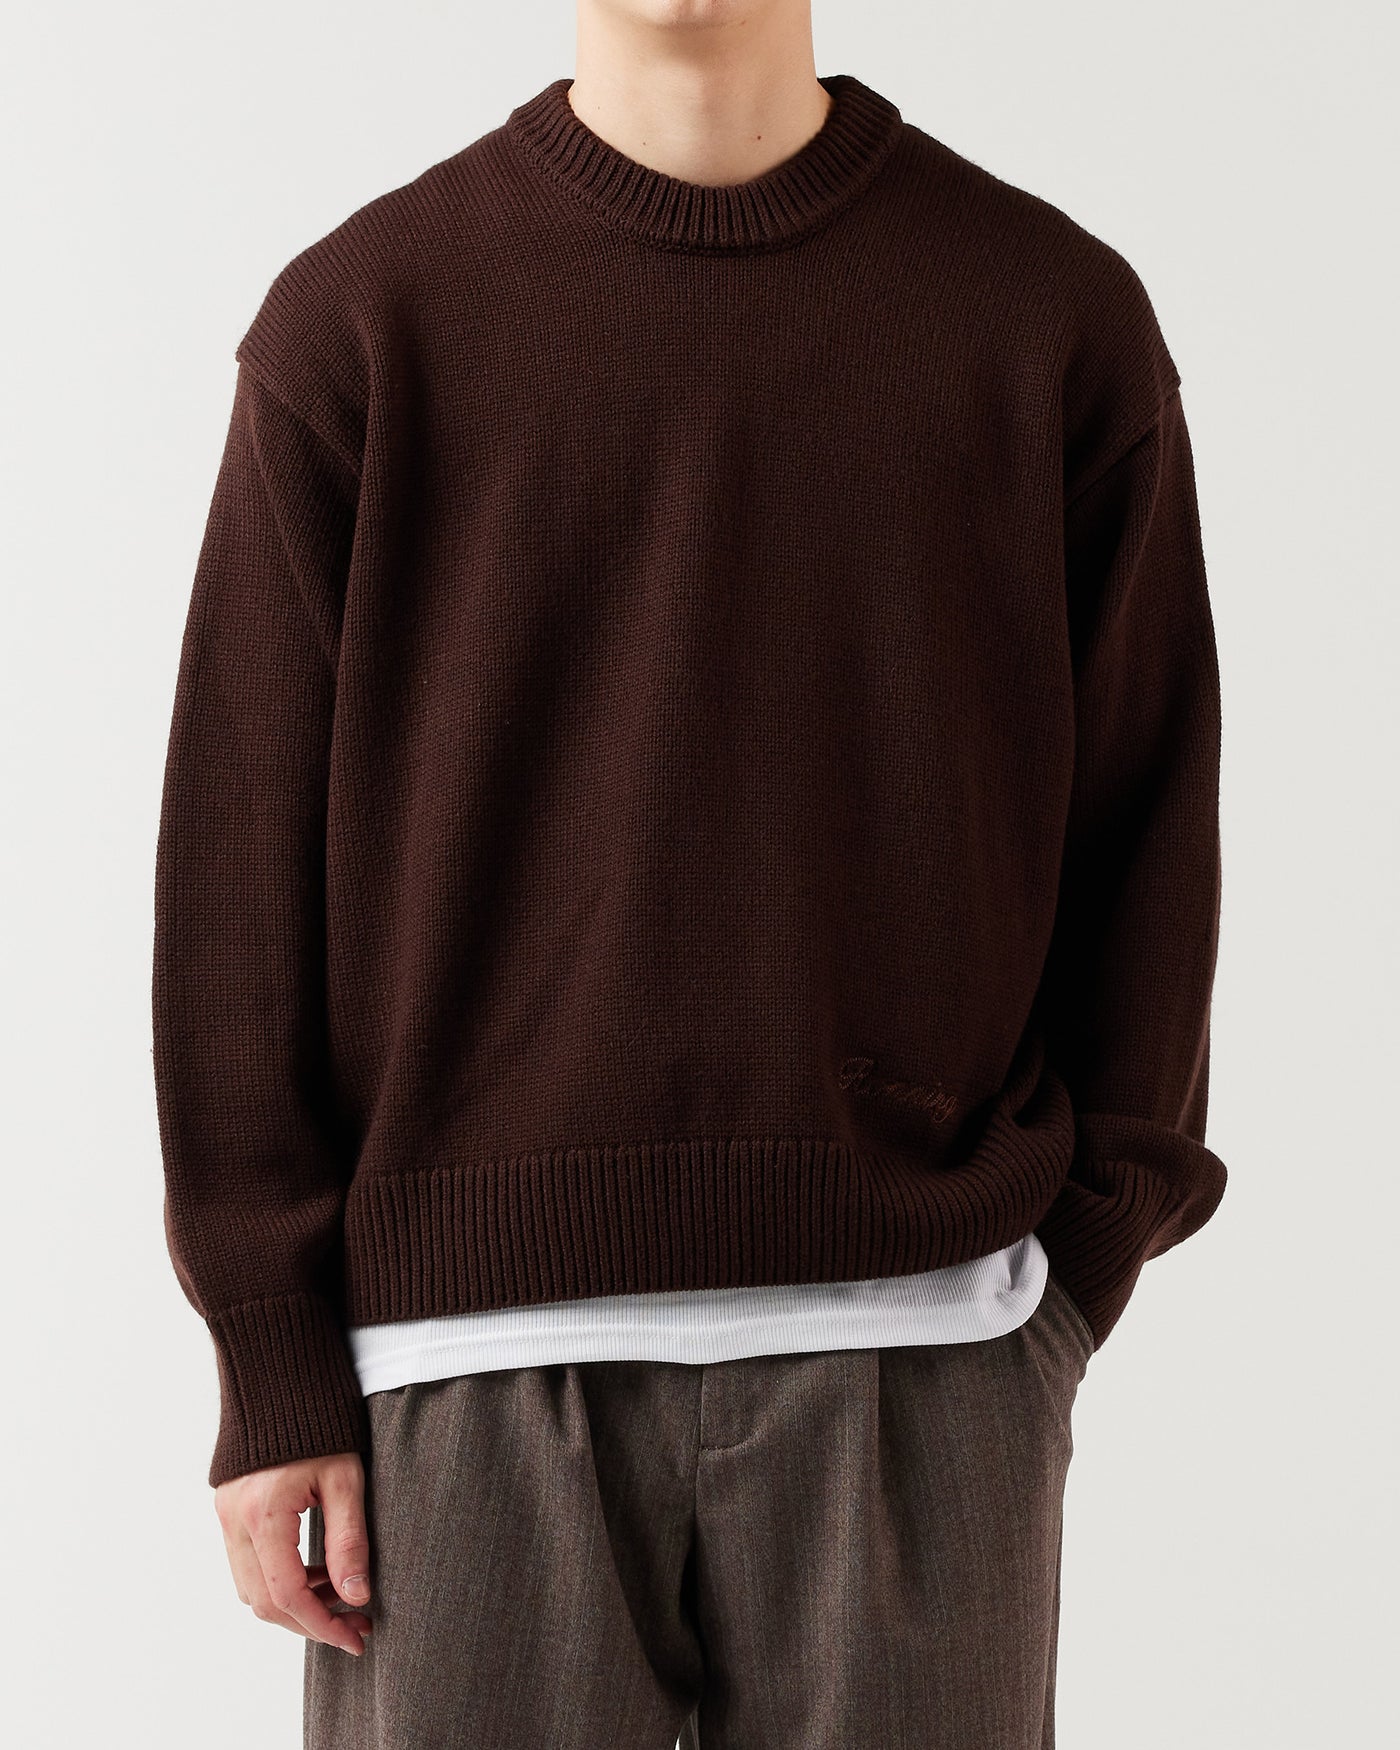 R Knit Sweater - Mocha Brown